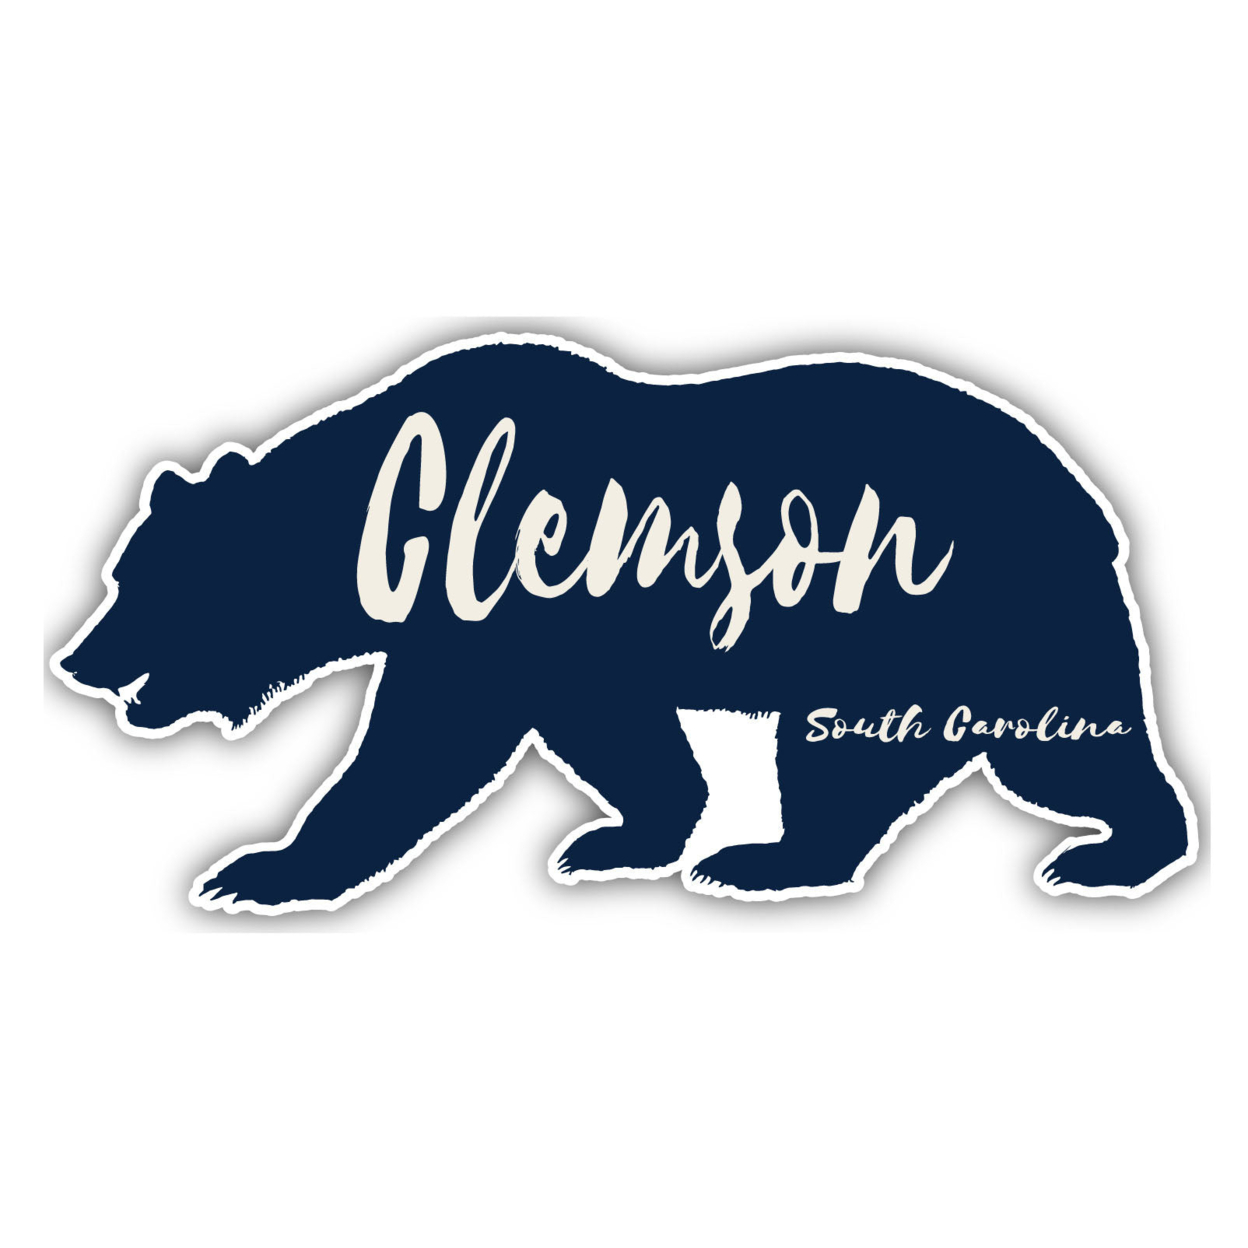 Clemson South Carolina Souvenir Decorative Stickers (Choose Theme And Size) - 4-Pack, 6-Inch, Bear